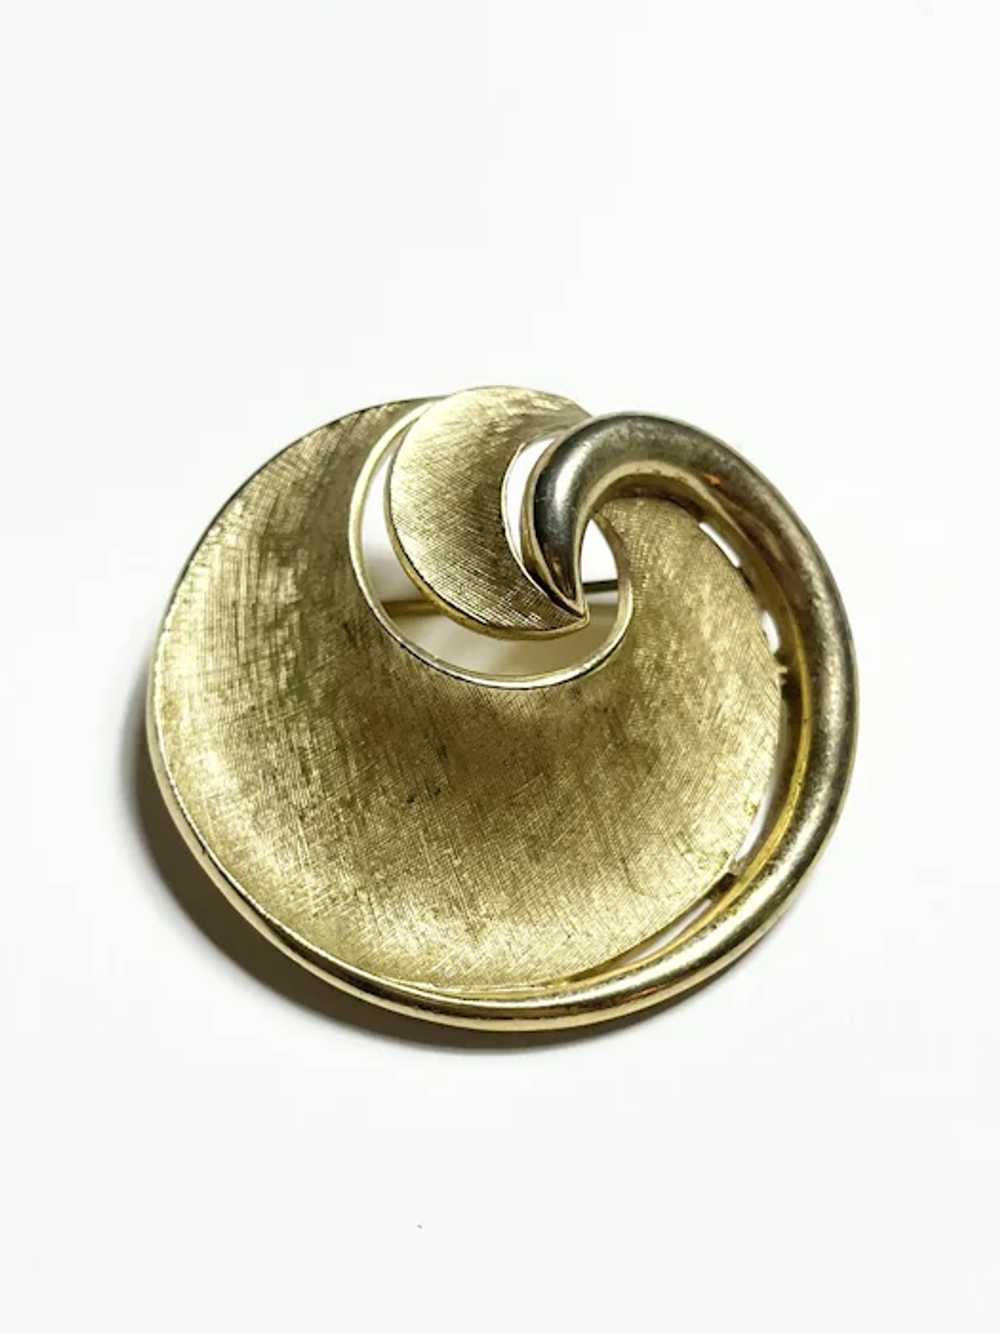 Vintage Crown Trifari Brushed Gold Brooch Pin - image 2